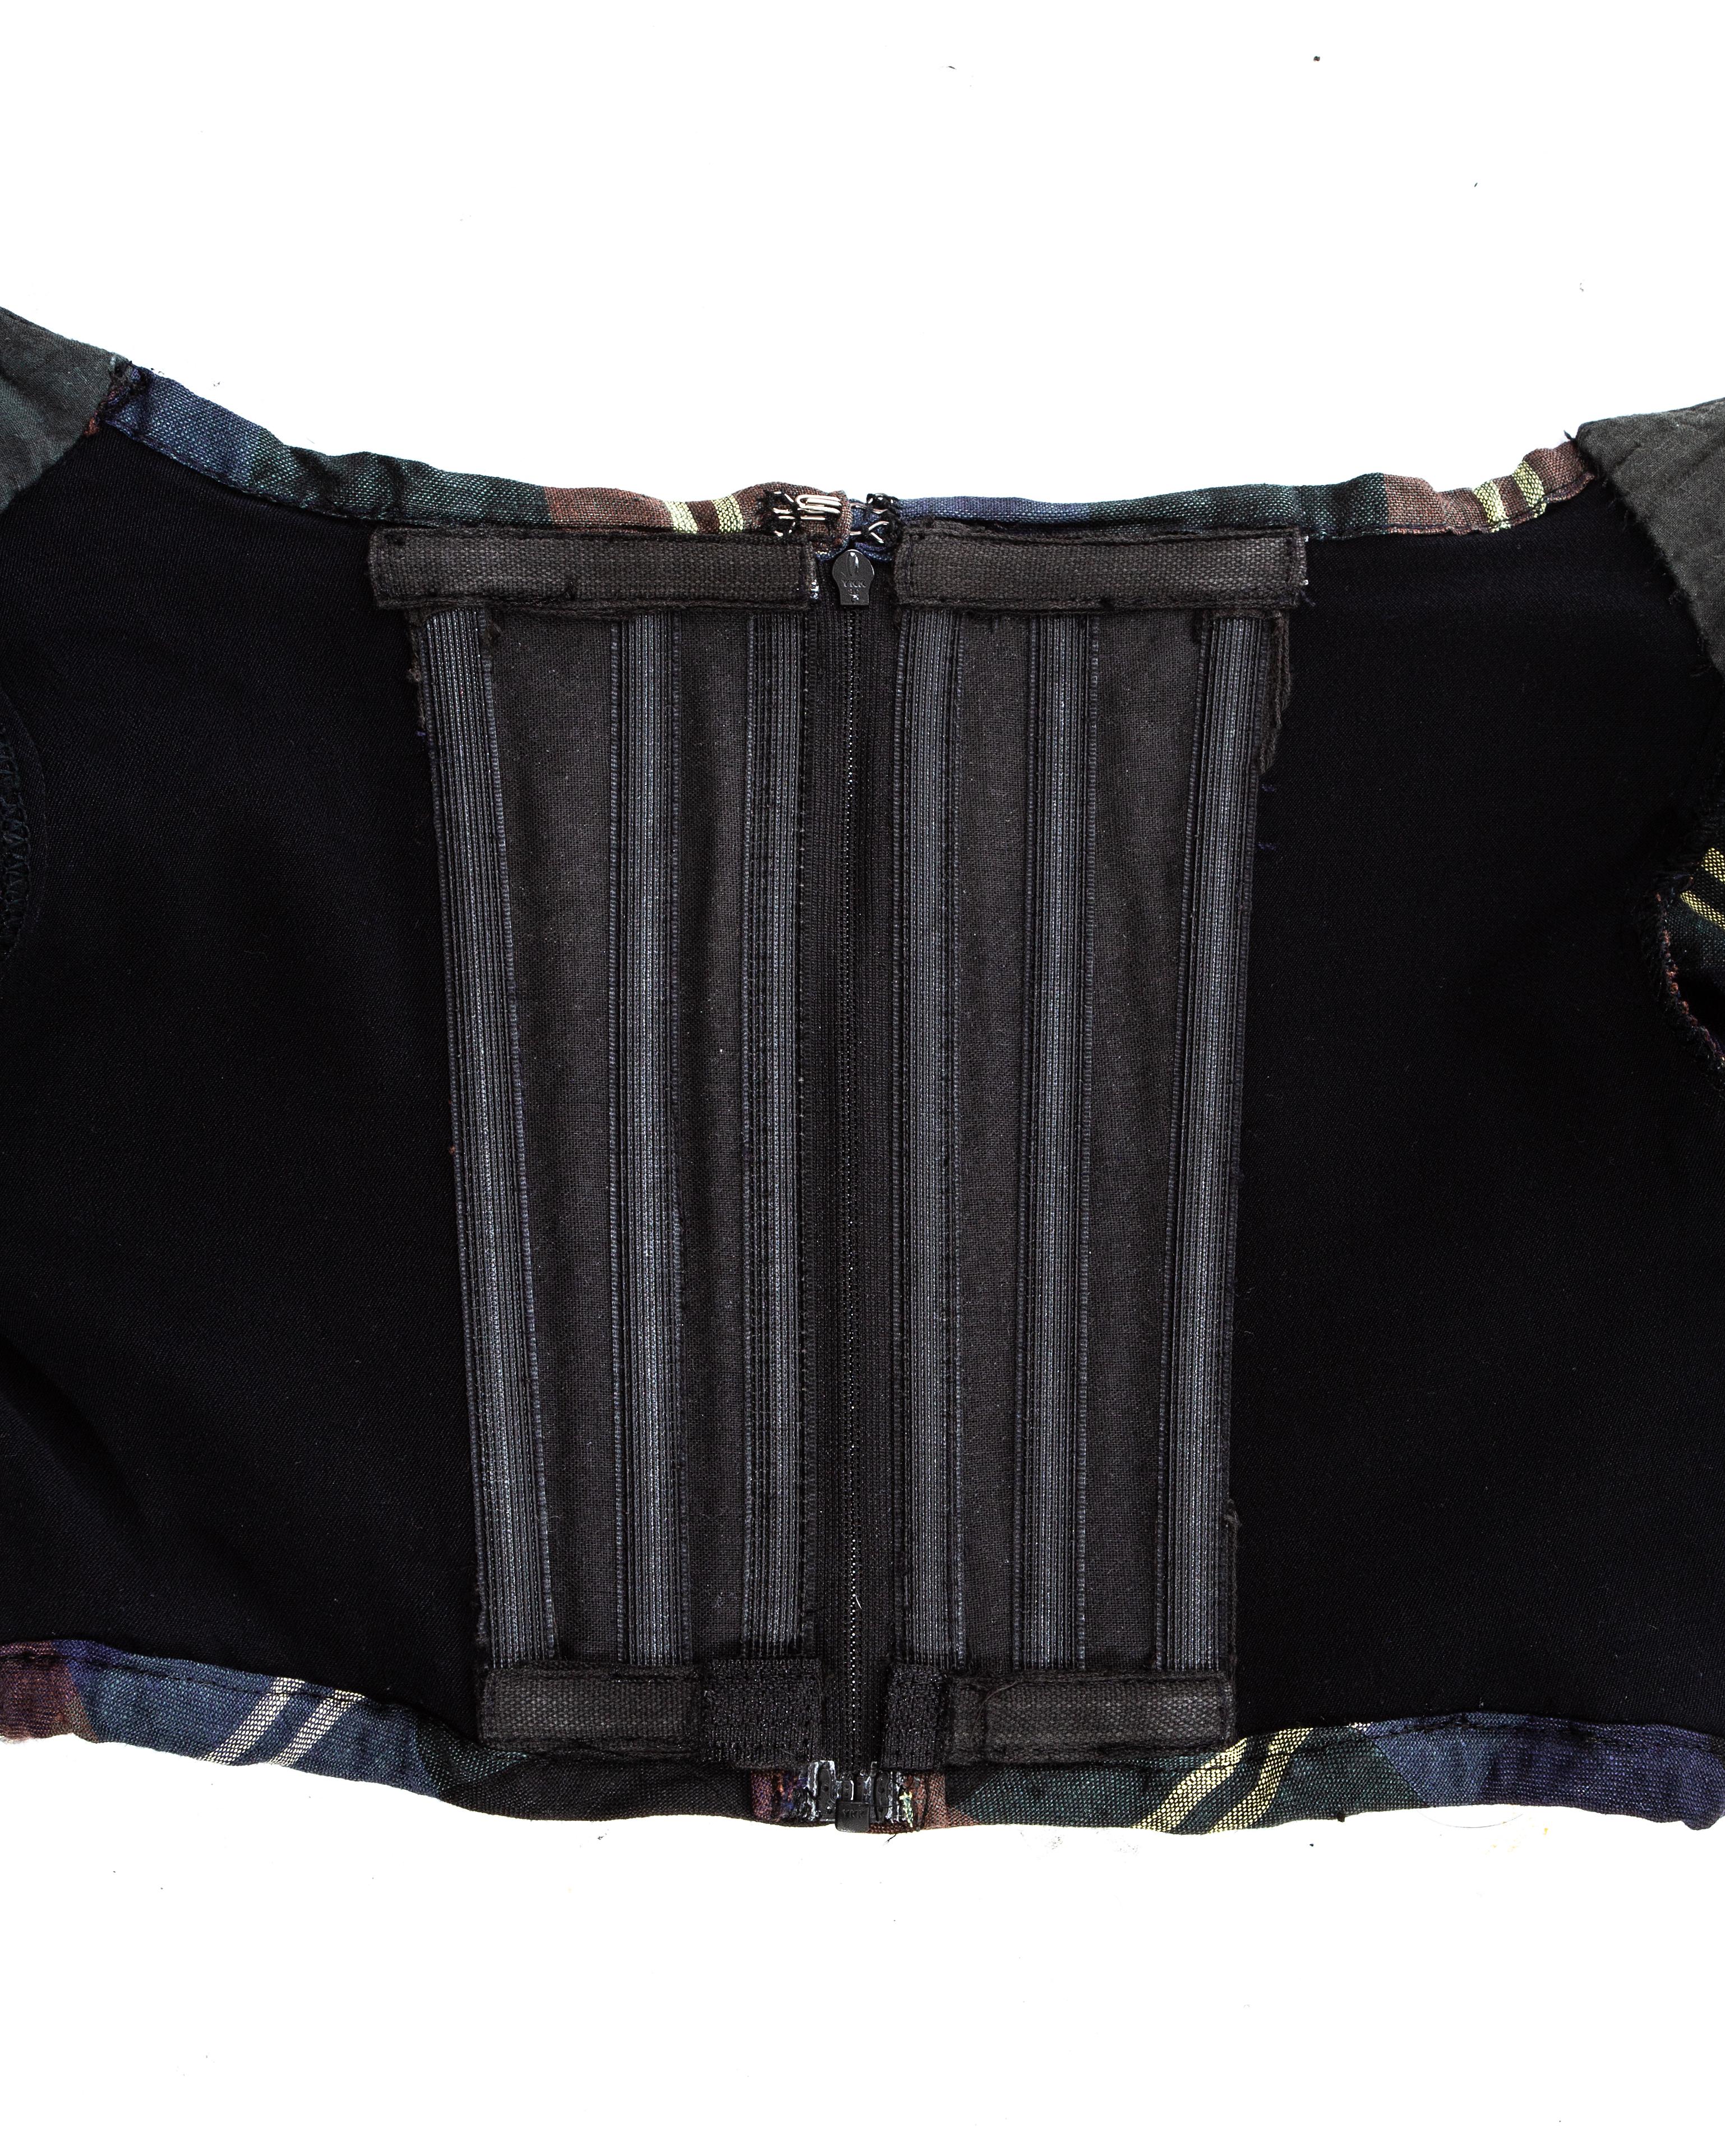 Black Vivienne Westwood cotton checked cropped corset top, c. 1990s